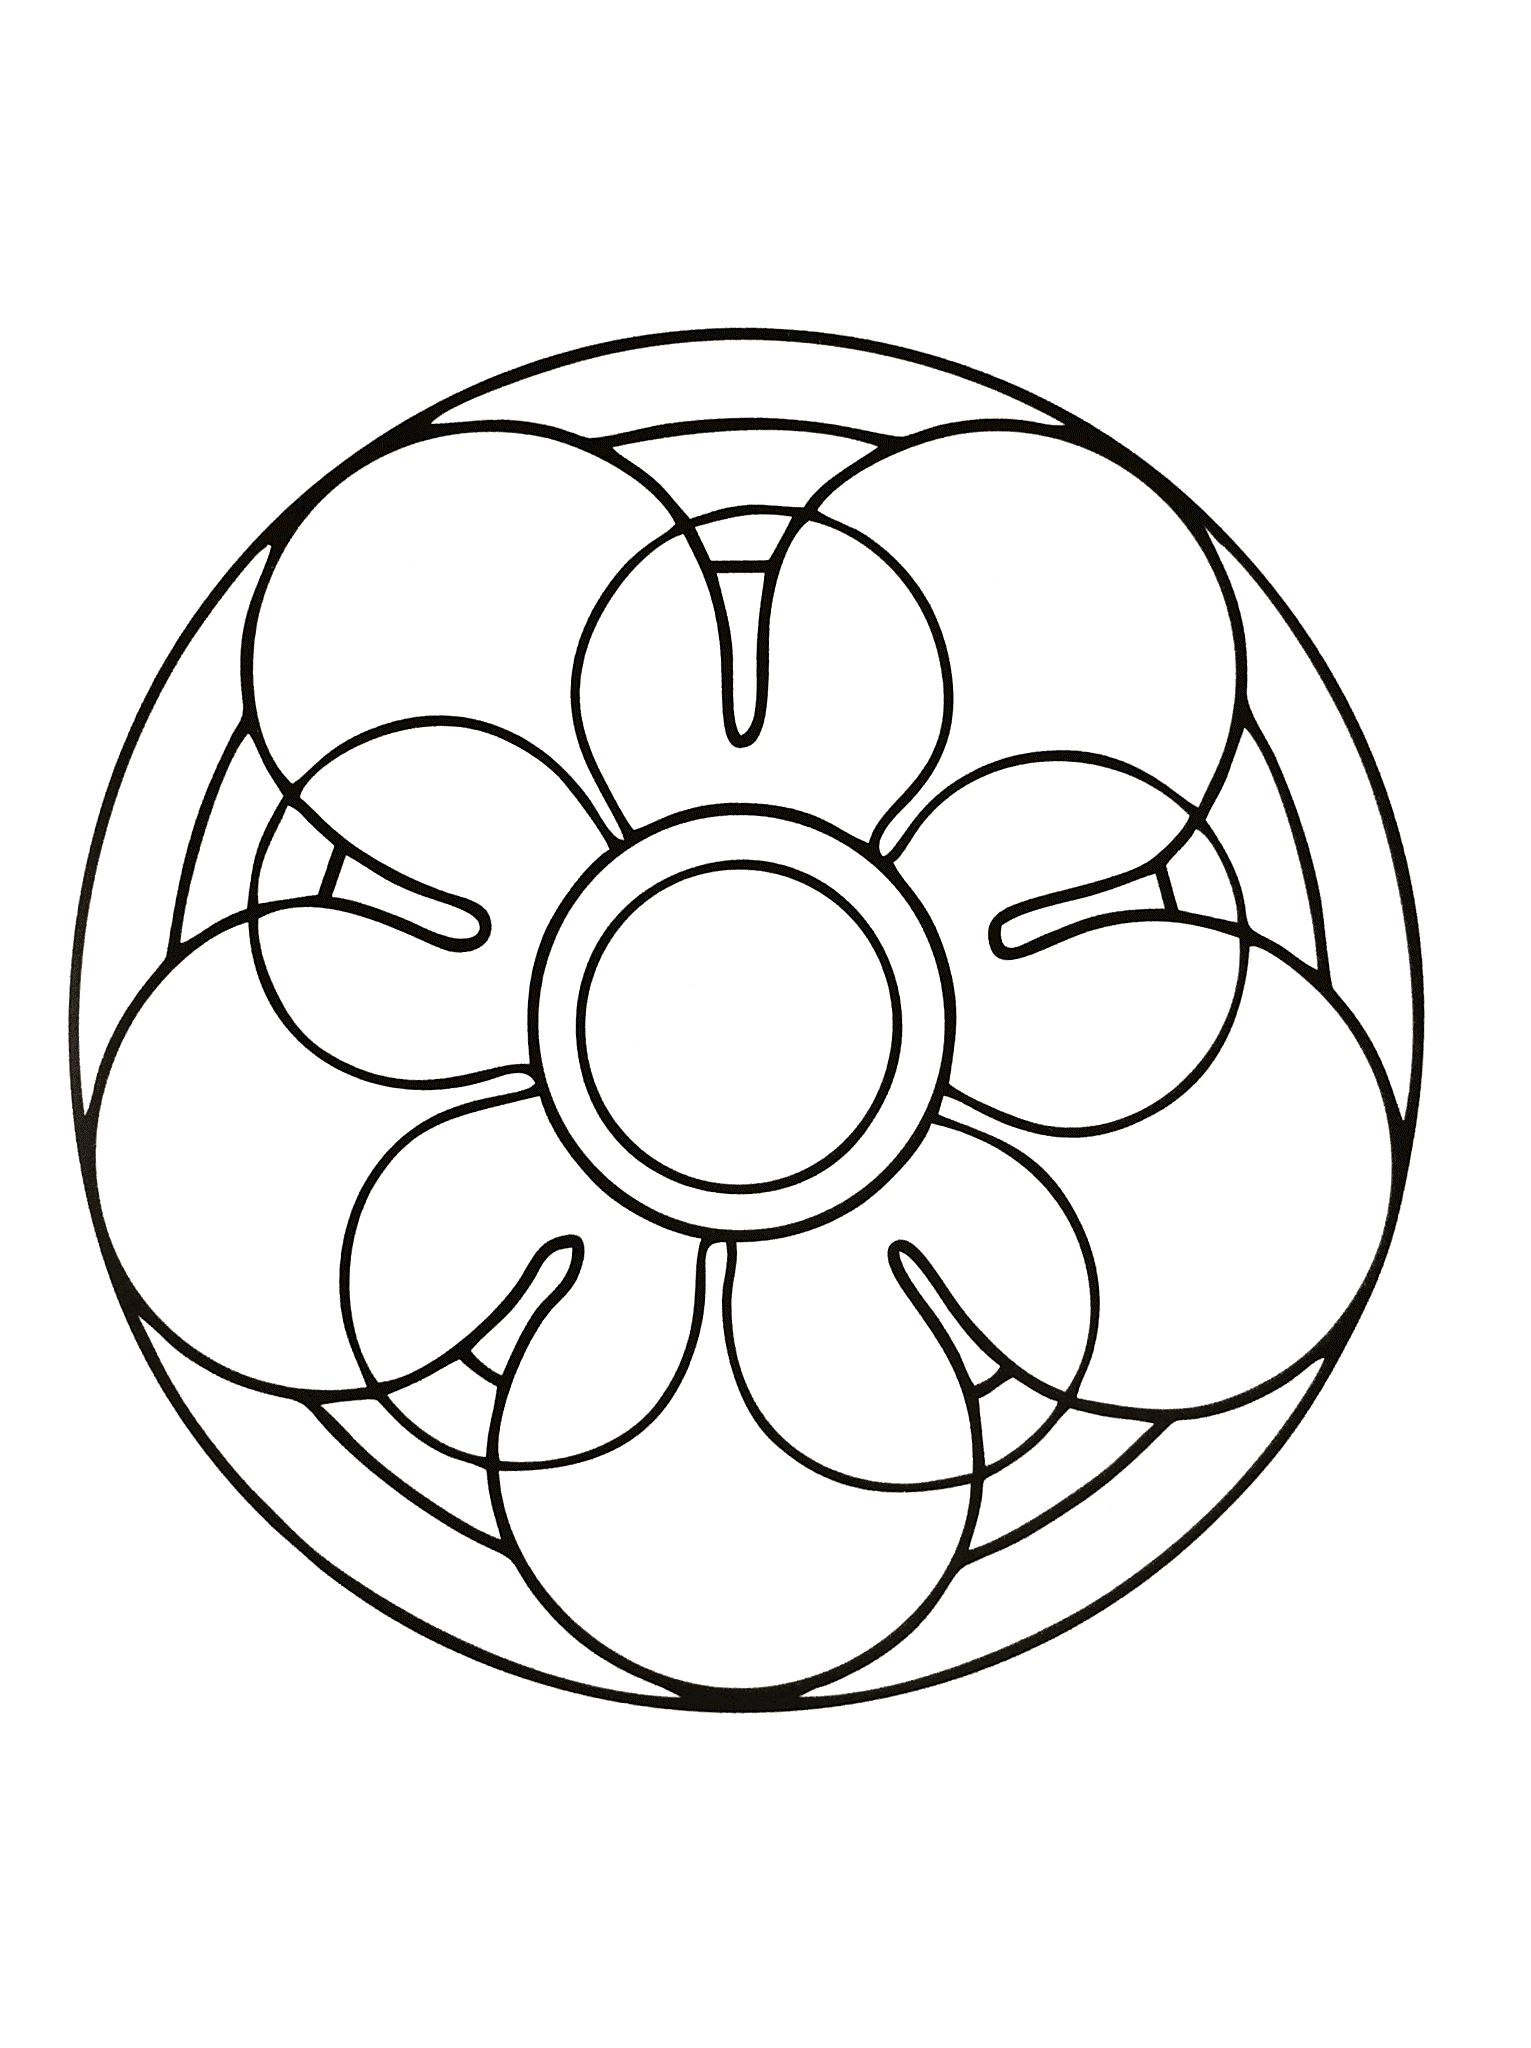 Mandalas geometric to print - 10